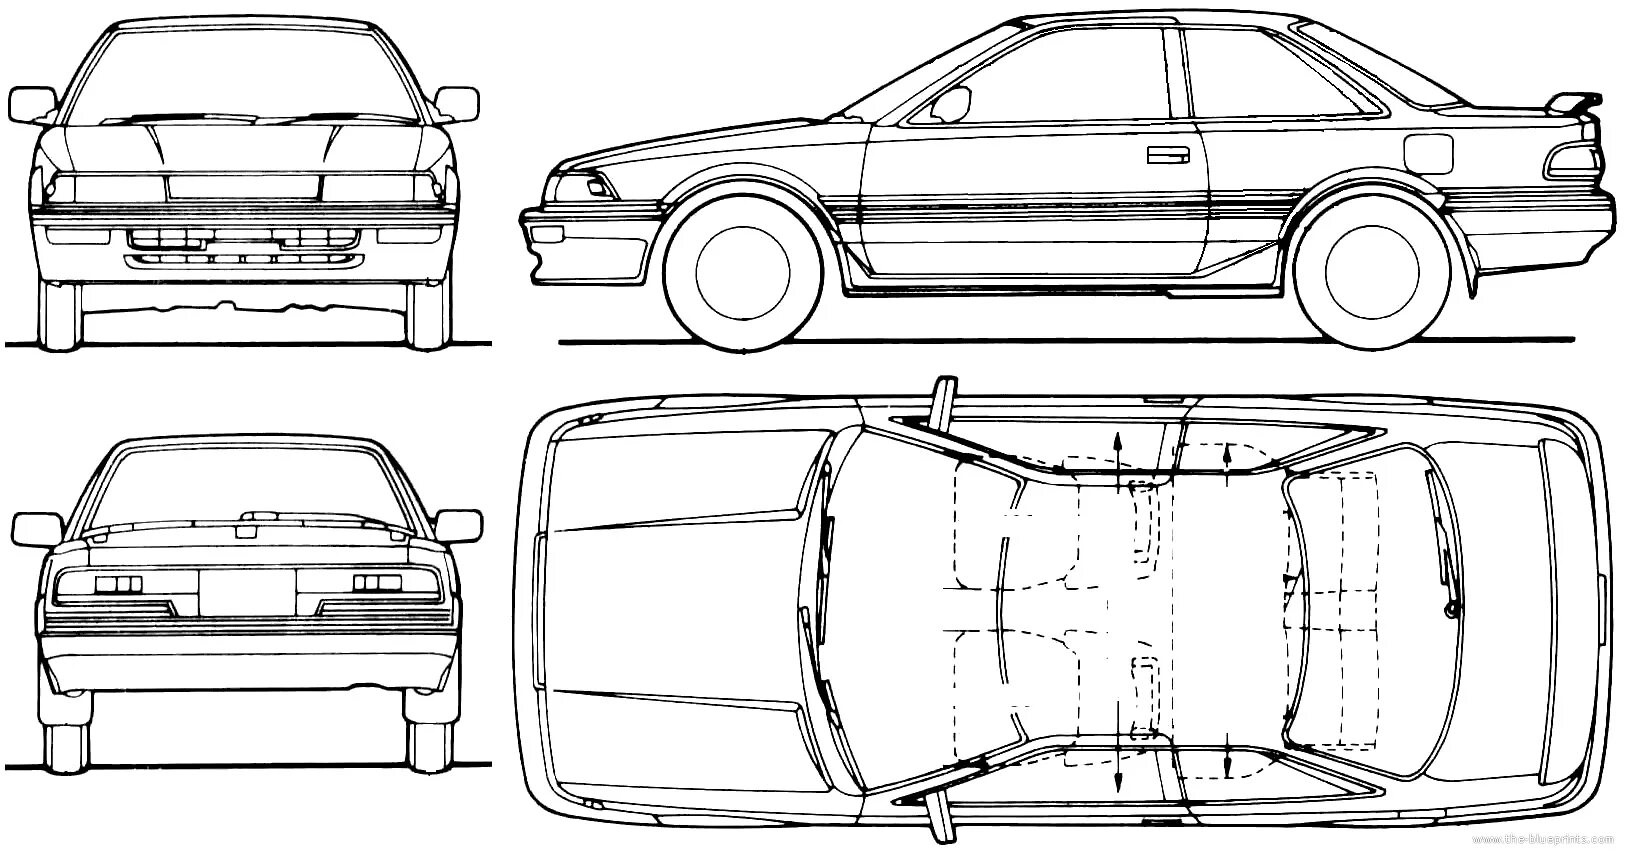 Размеры тойота спринтер. Toyota Corolla ae86 чертеж. Toyota Corolla ae86 Blueprint. Toyota ae86 Blueprint. Чертеж Toyota Corolla ae86 Levin.